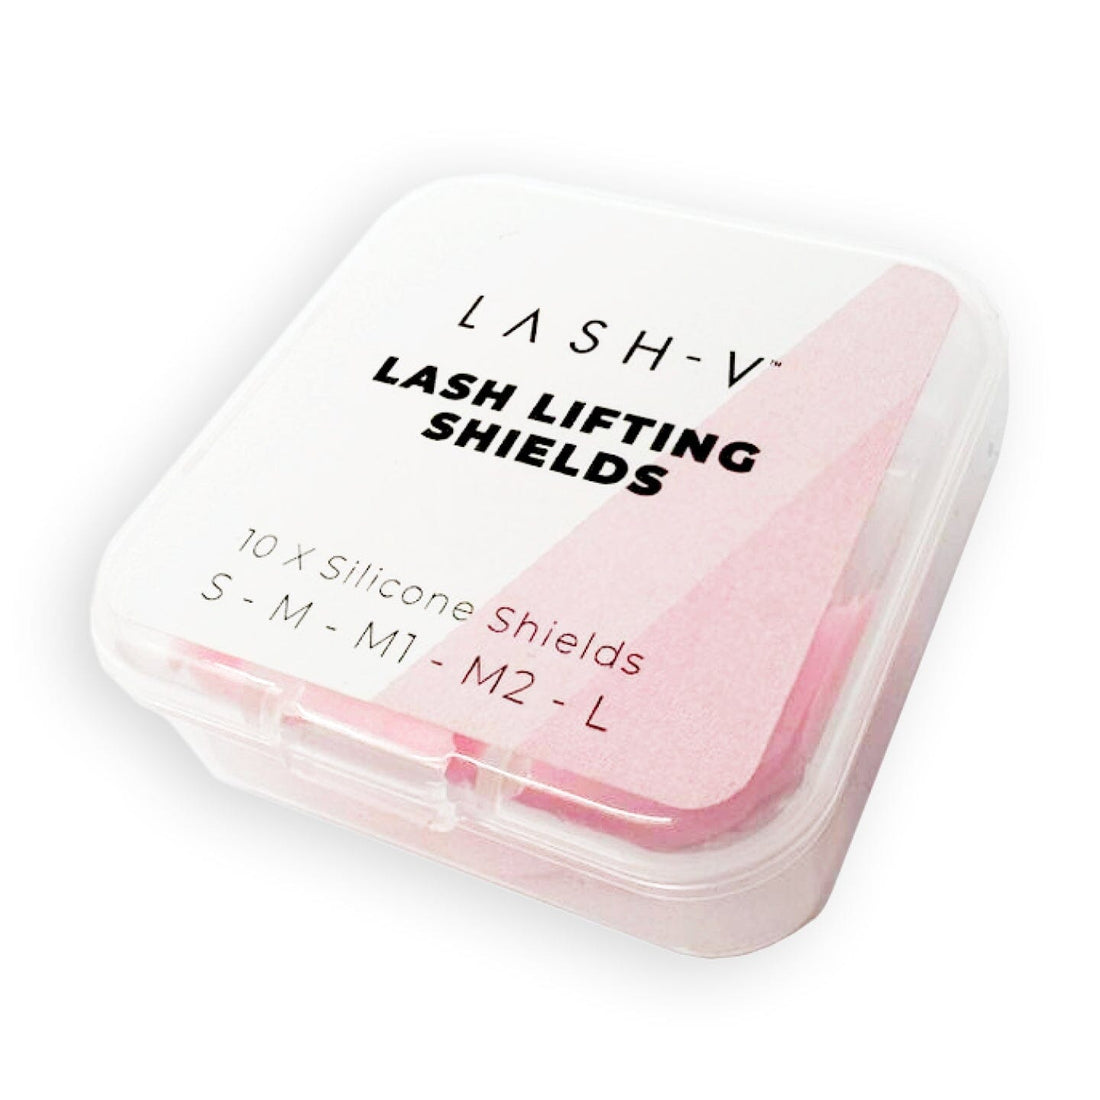 Lash Lift Shields - 5 Sizes (10x Pack) - LASH V